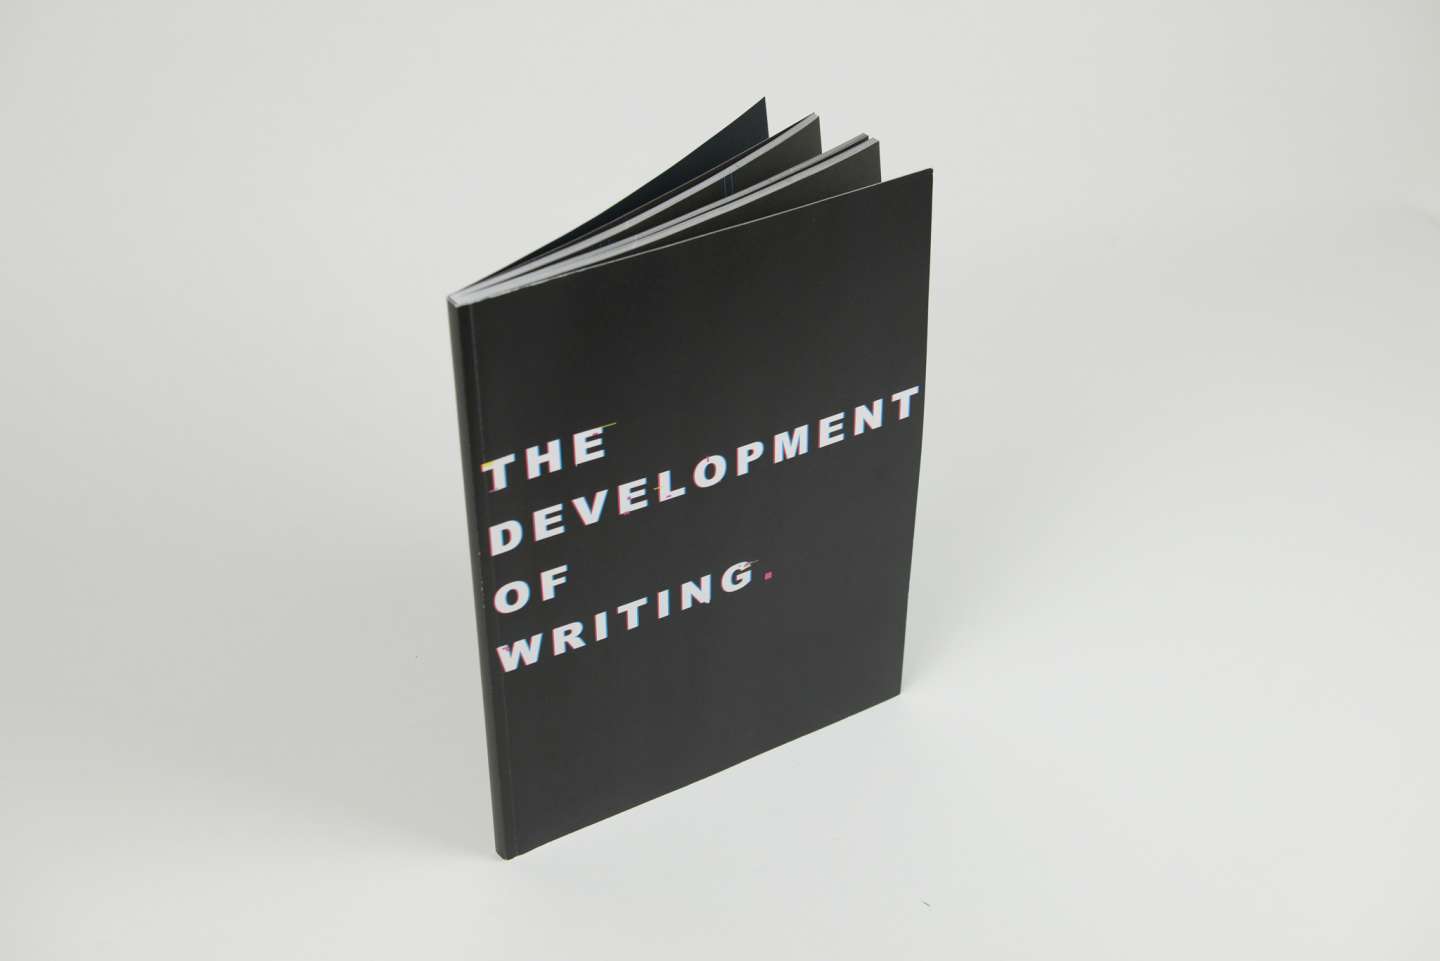 Development of Writing